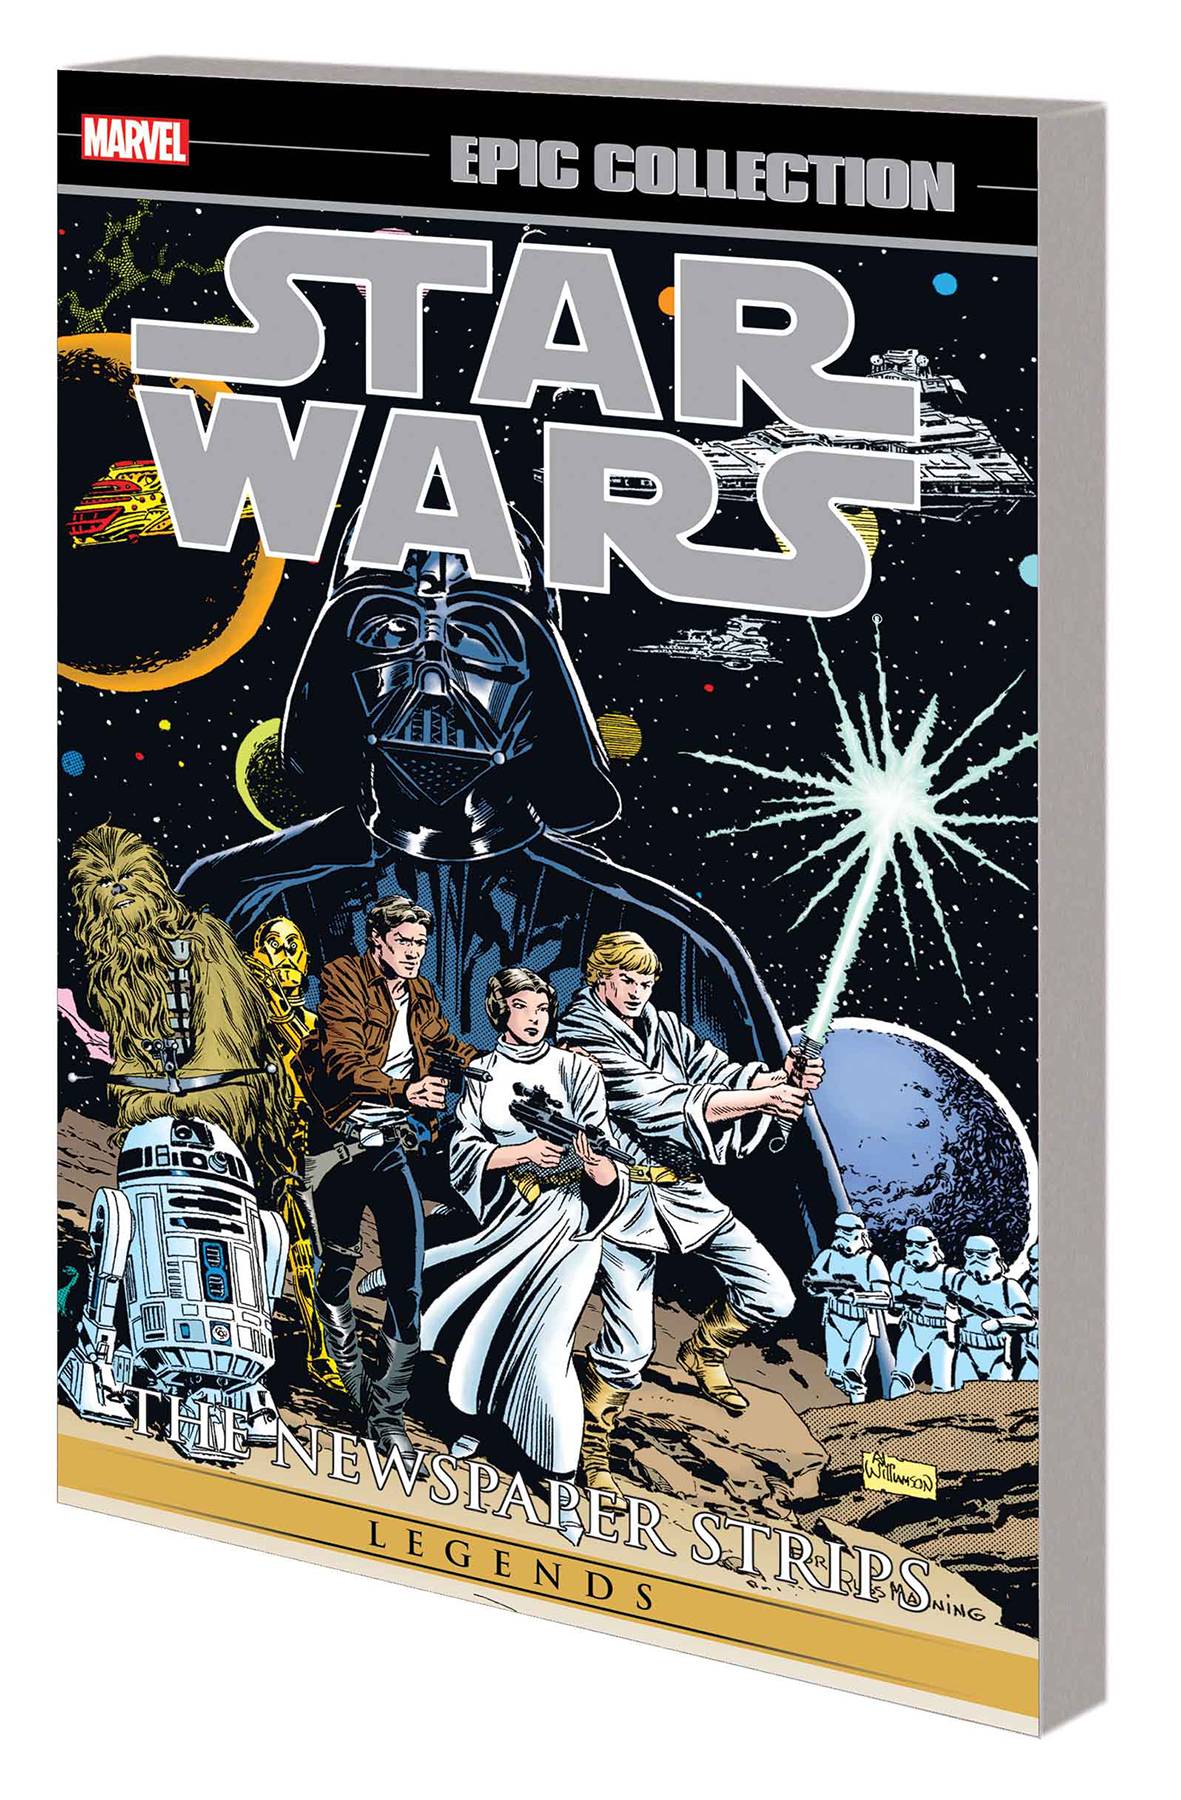 Star Wars Legends Epic Collection Graphic Novel Volume 1 Newspaper Strips